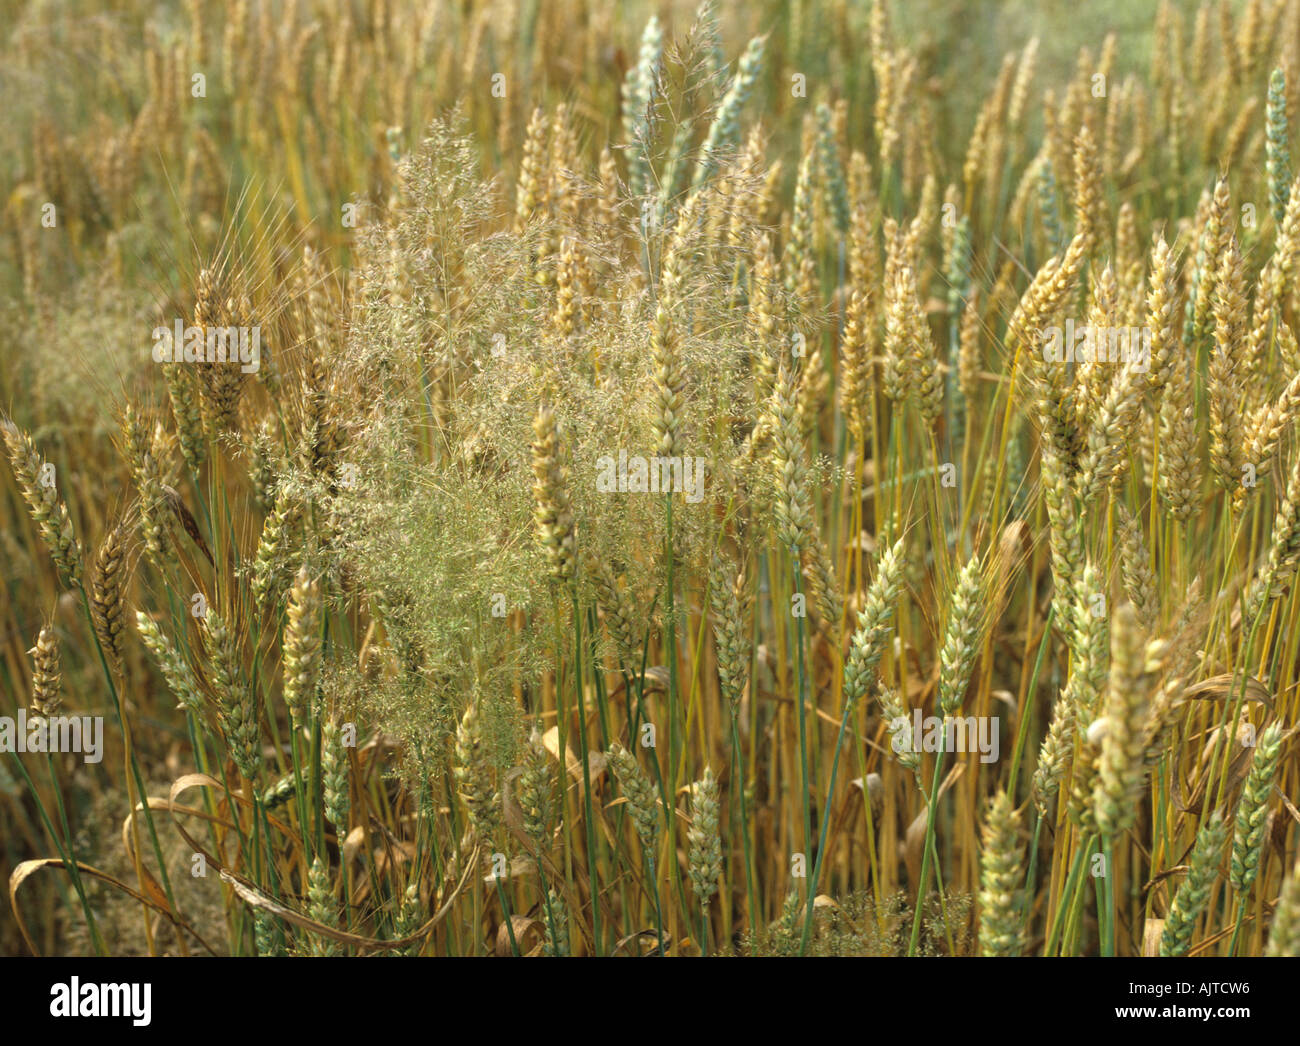 Silky bent grass Apera spica venti seeding in ripe wheat crop France Stock Photo